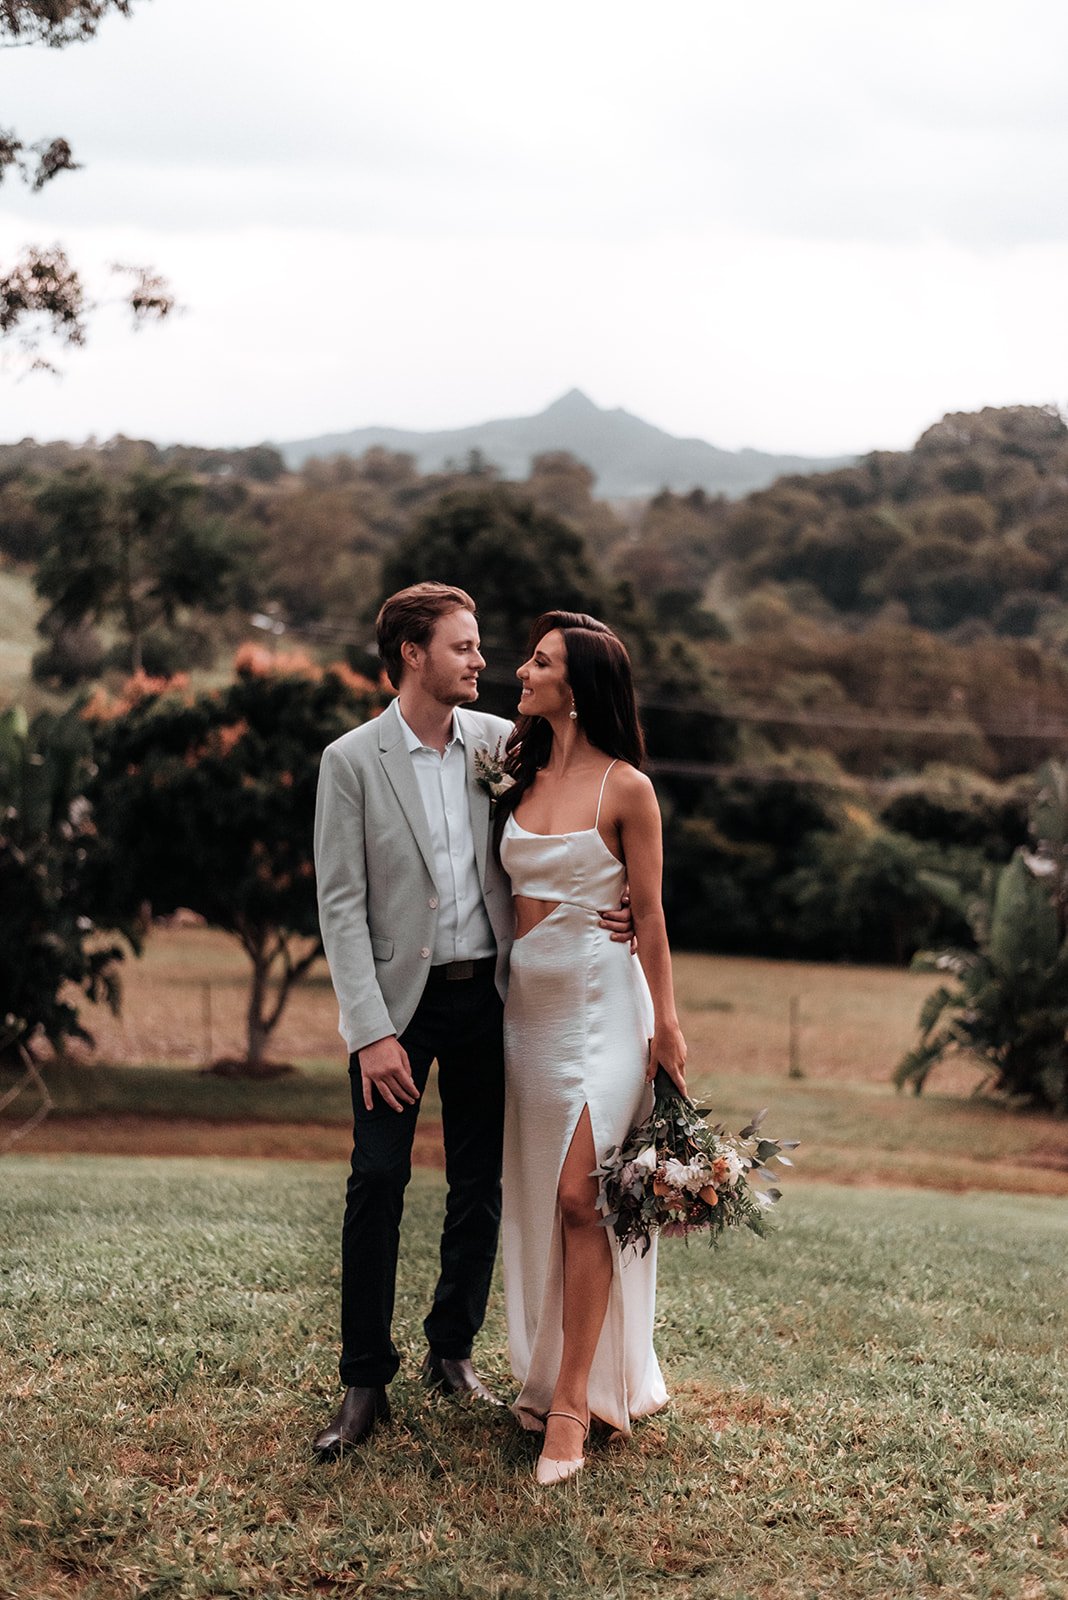 LOVELENSCAPES • The Figs Byron Bay Wedding • Chosen by Kyha • T&C • 544_websize.jpg